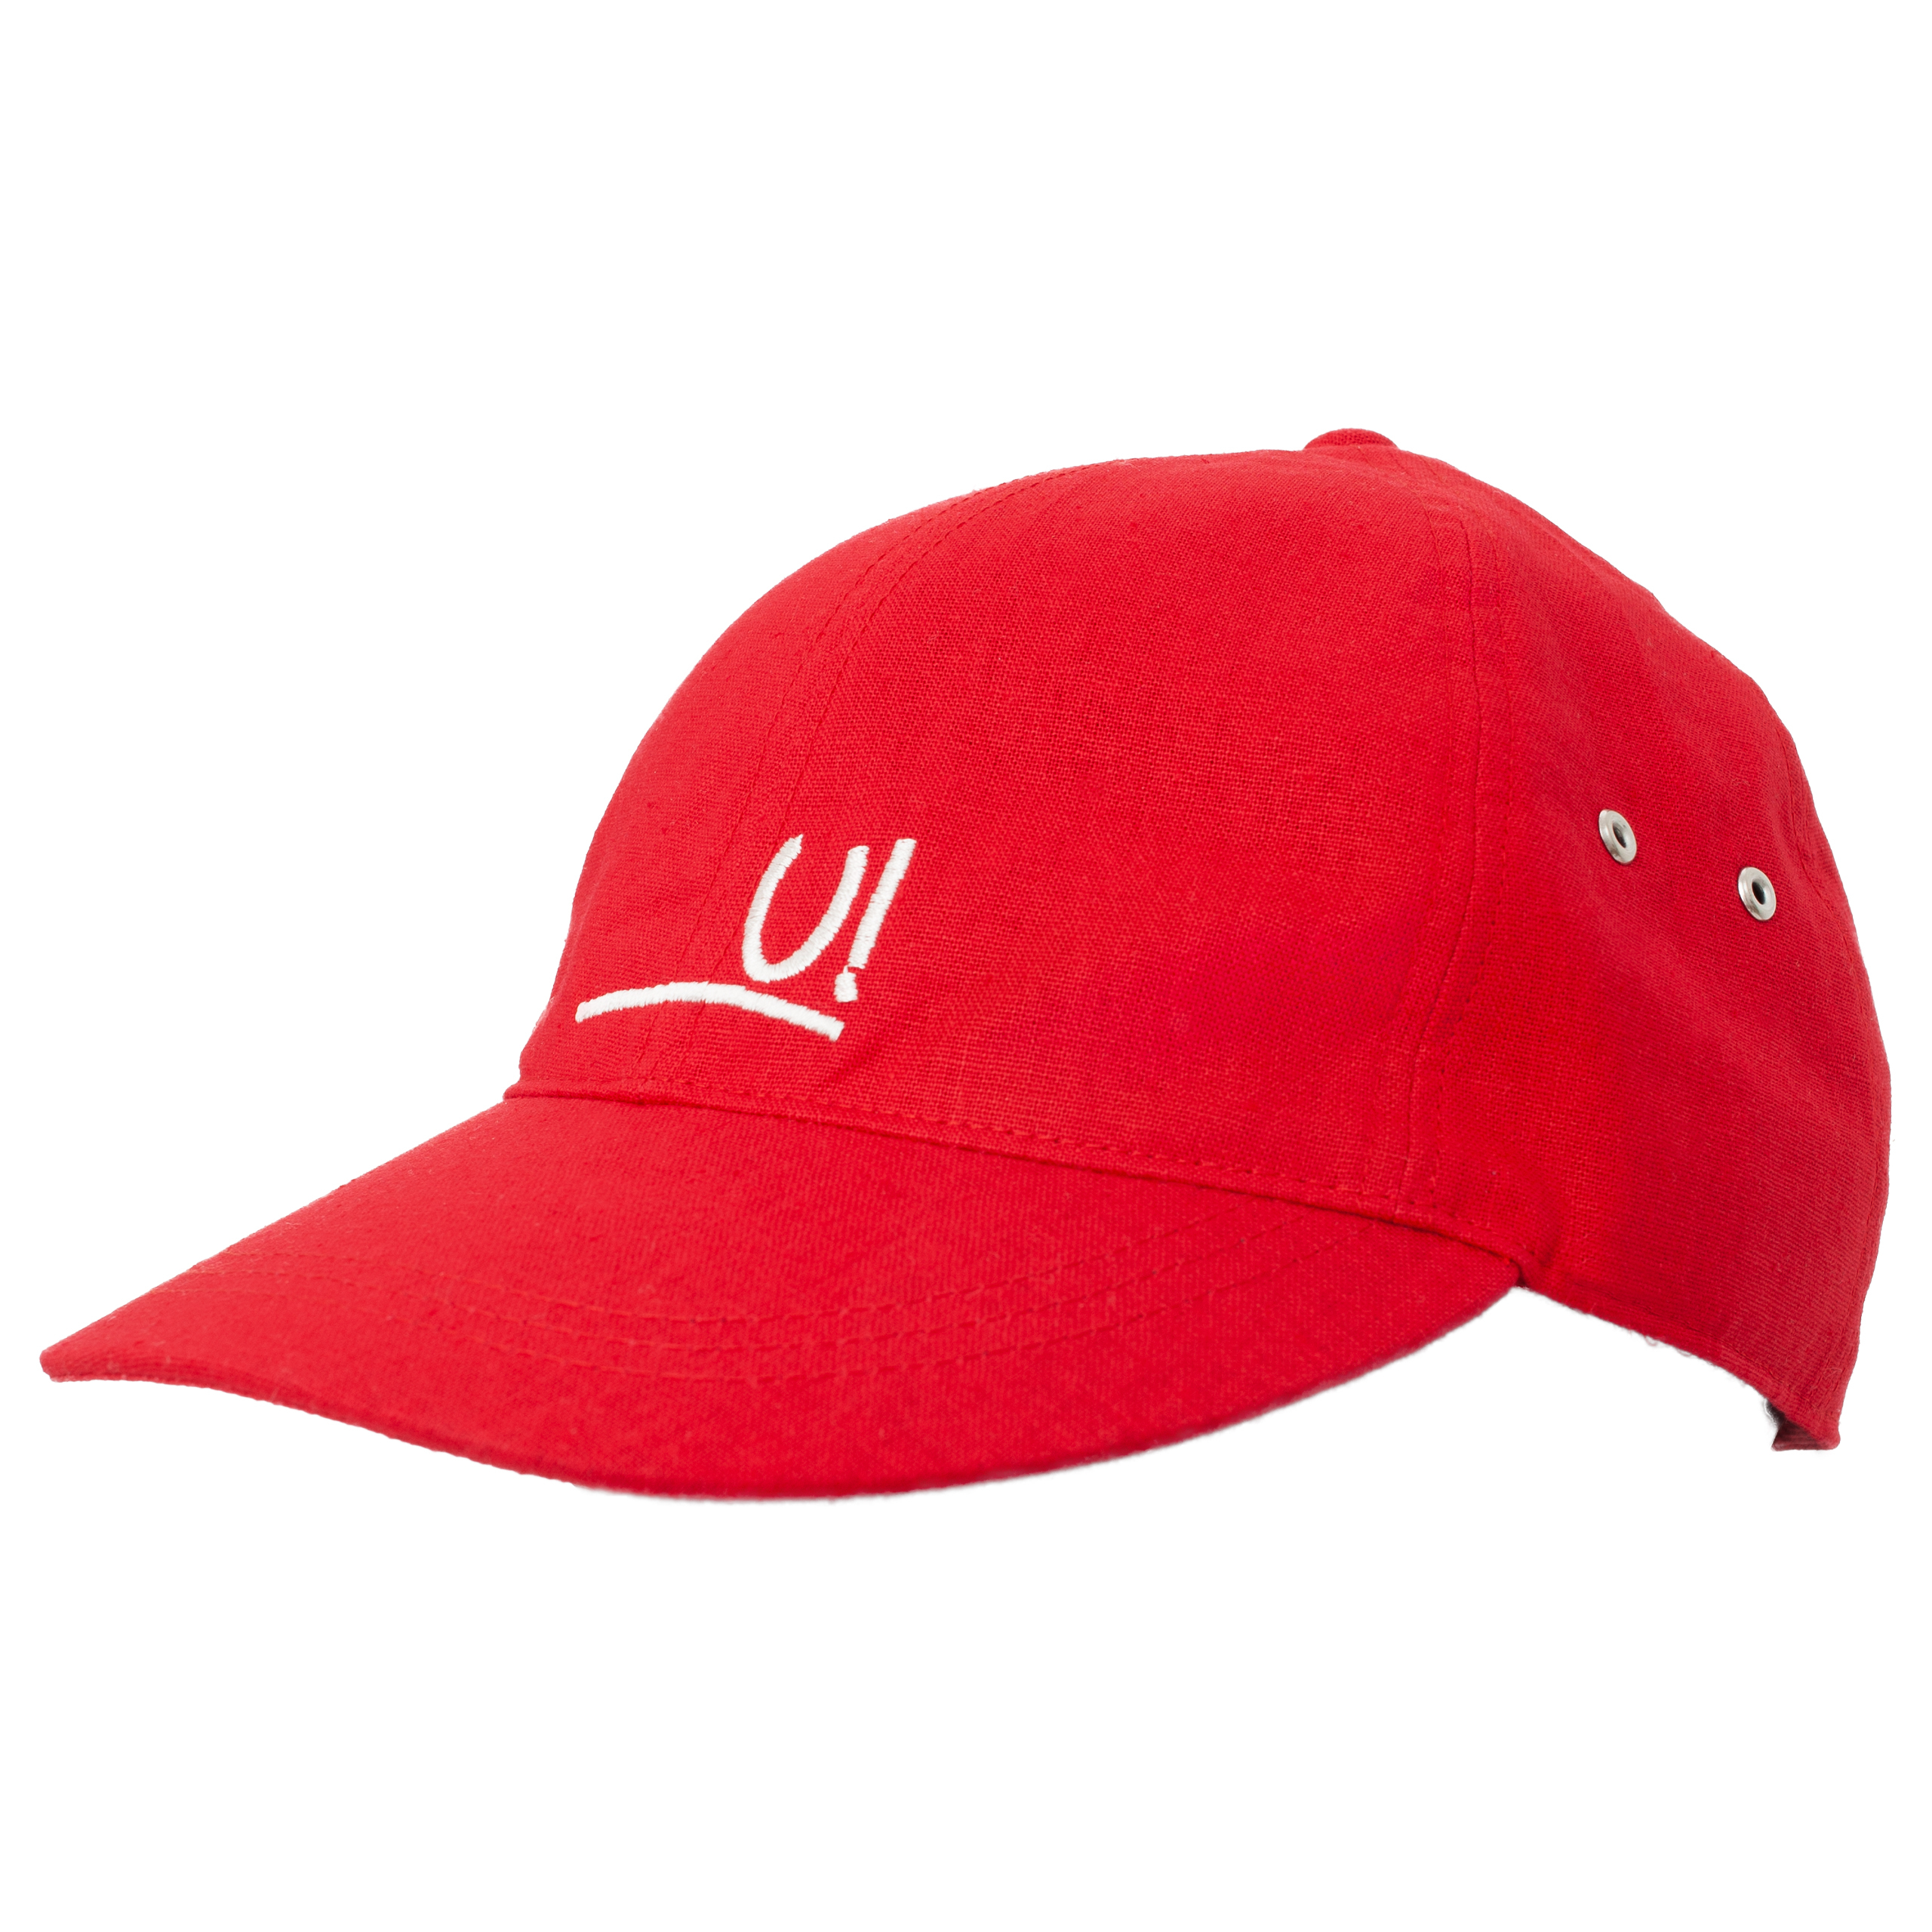 Красная кепка с вышивкой Undercover UC1C4H02-2/RED, размер One Size